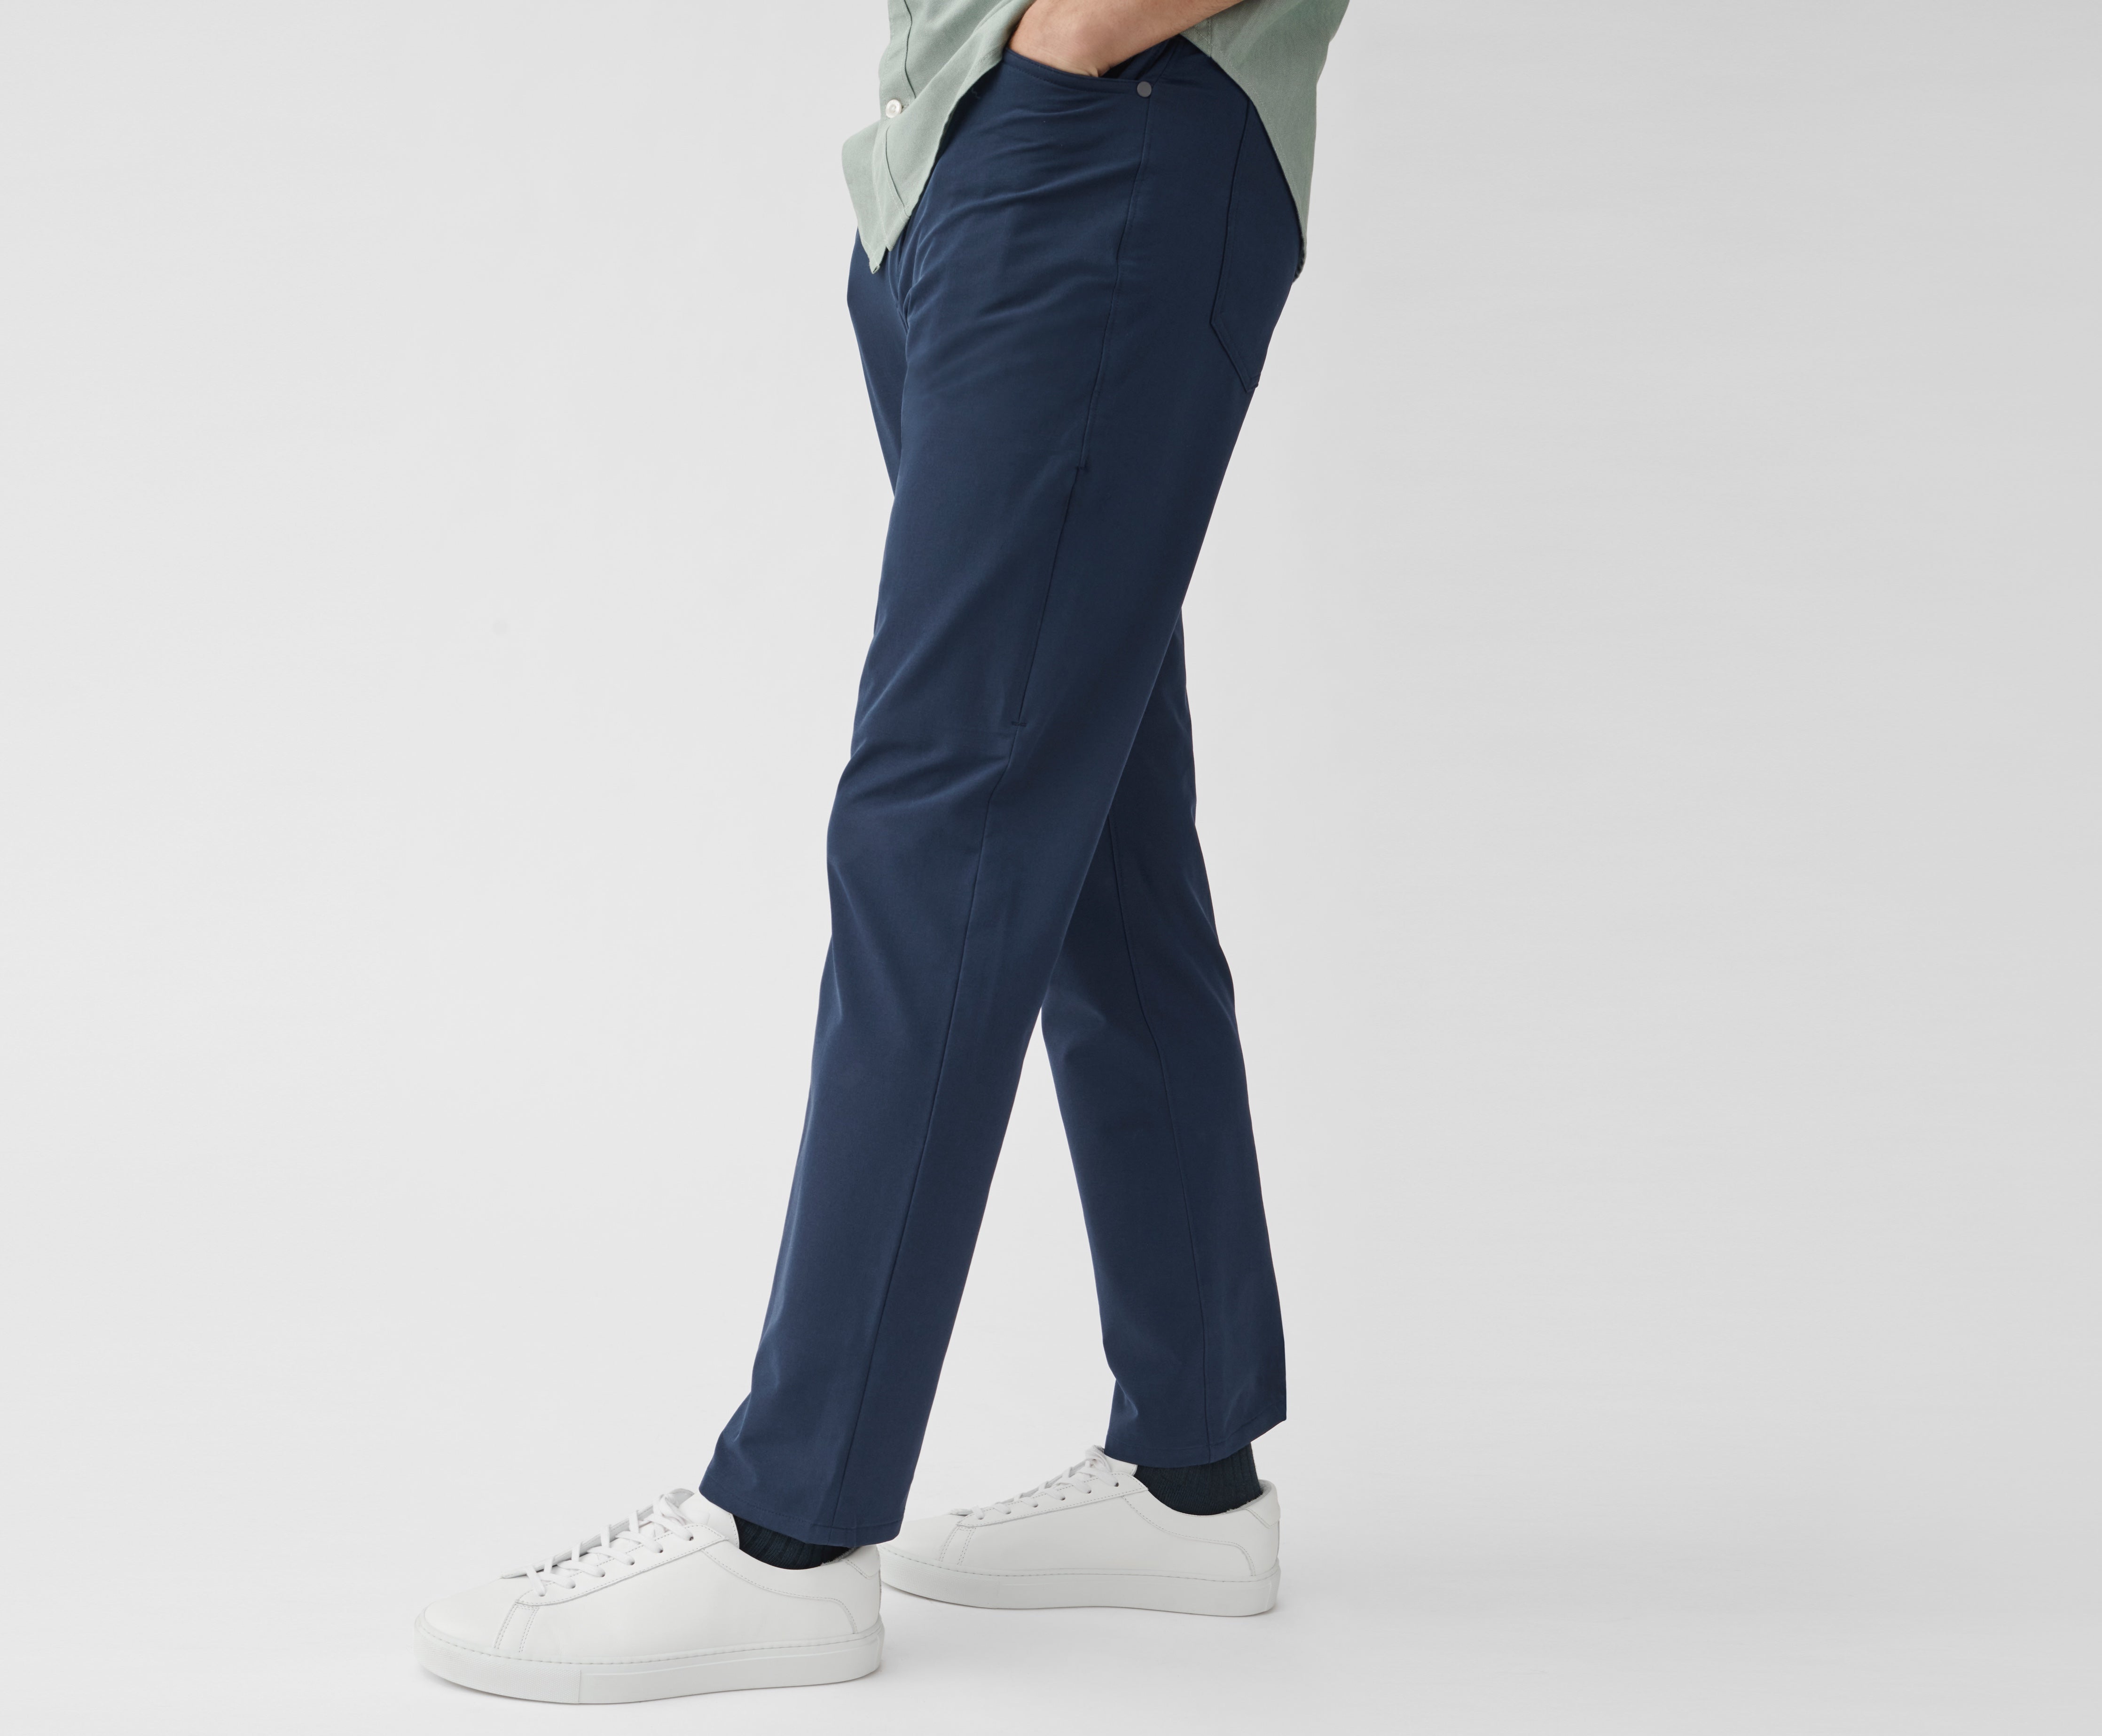 Macroman M-Series  Solid Men Blue Track Pants - Buy BLUE Macroman